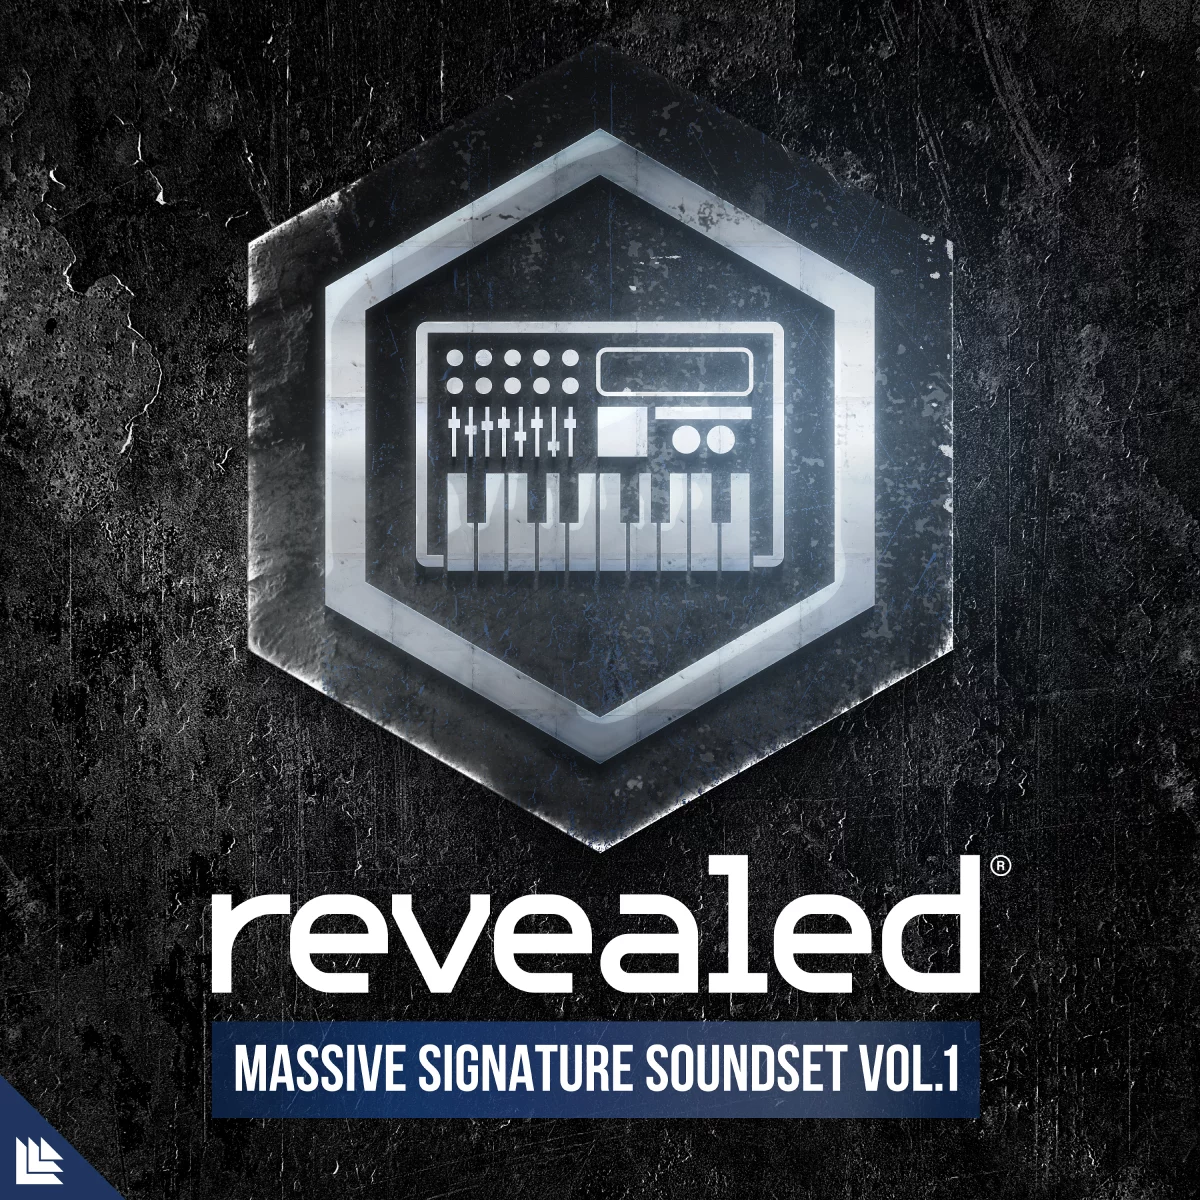 Revealed Massive Signature Soundset Vol. 1 - revealedrec⁠ 